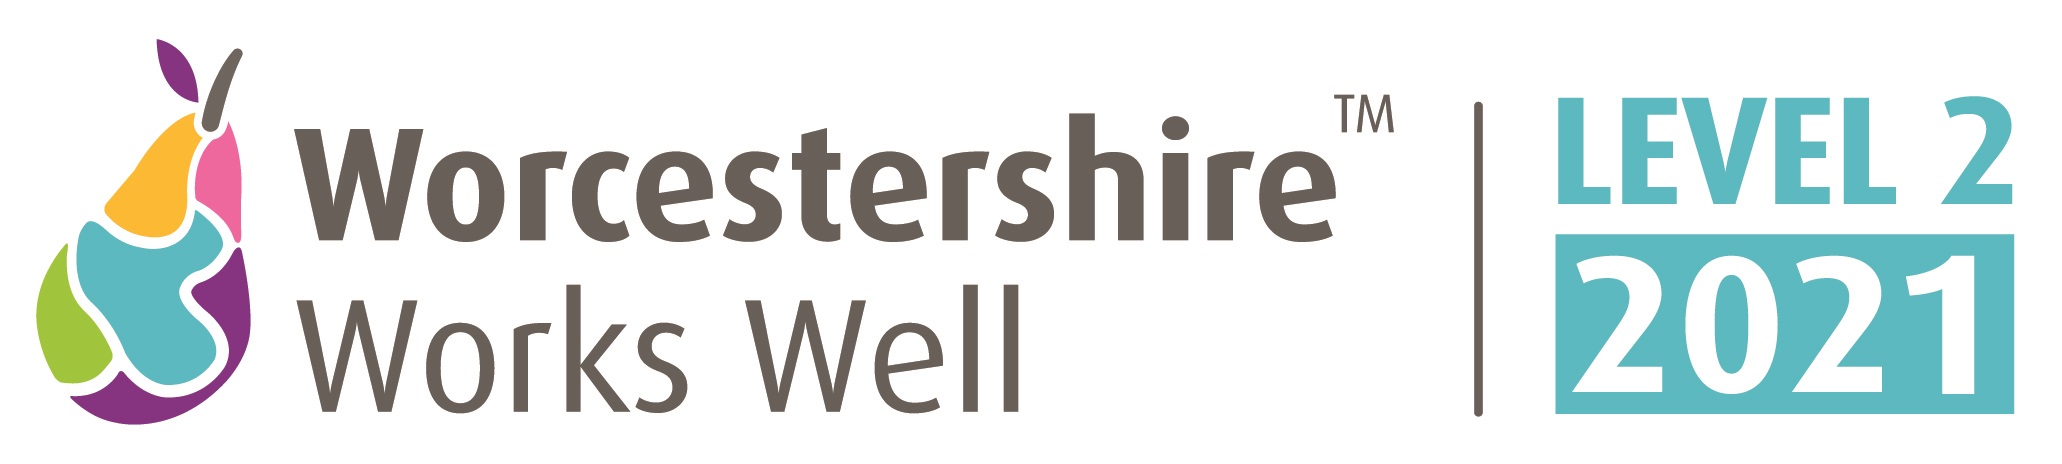 Worcestershire Works Well Level 2 Hewett Recruitment